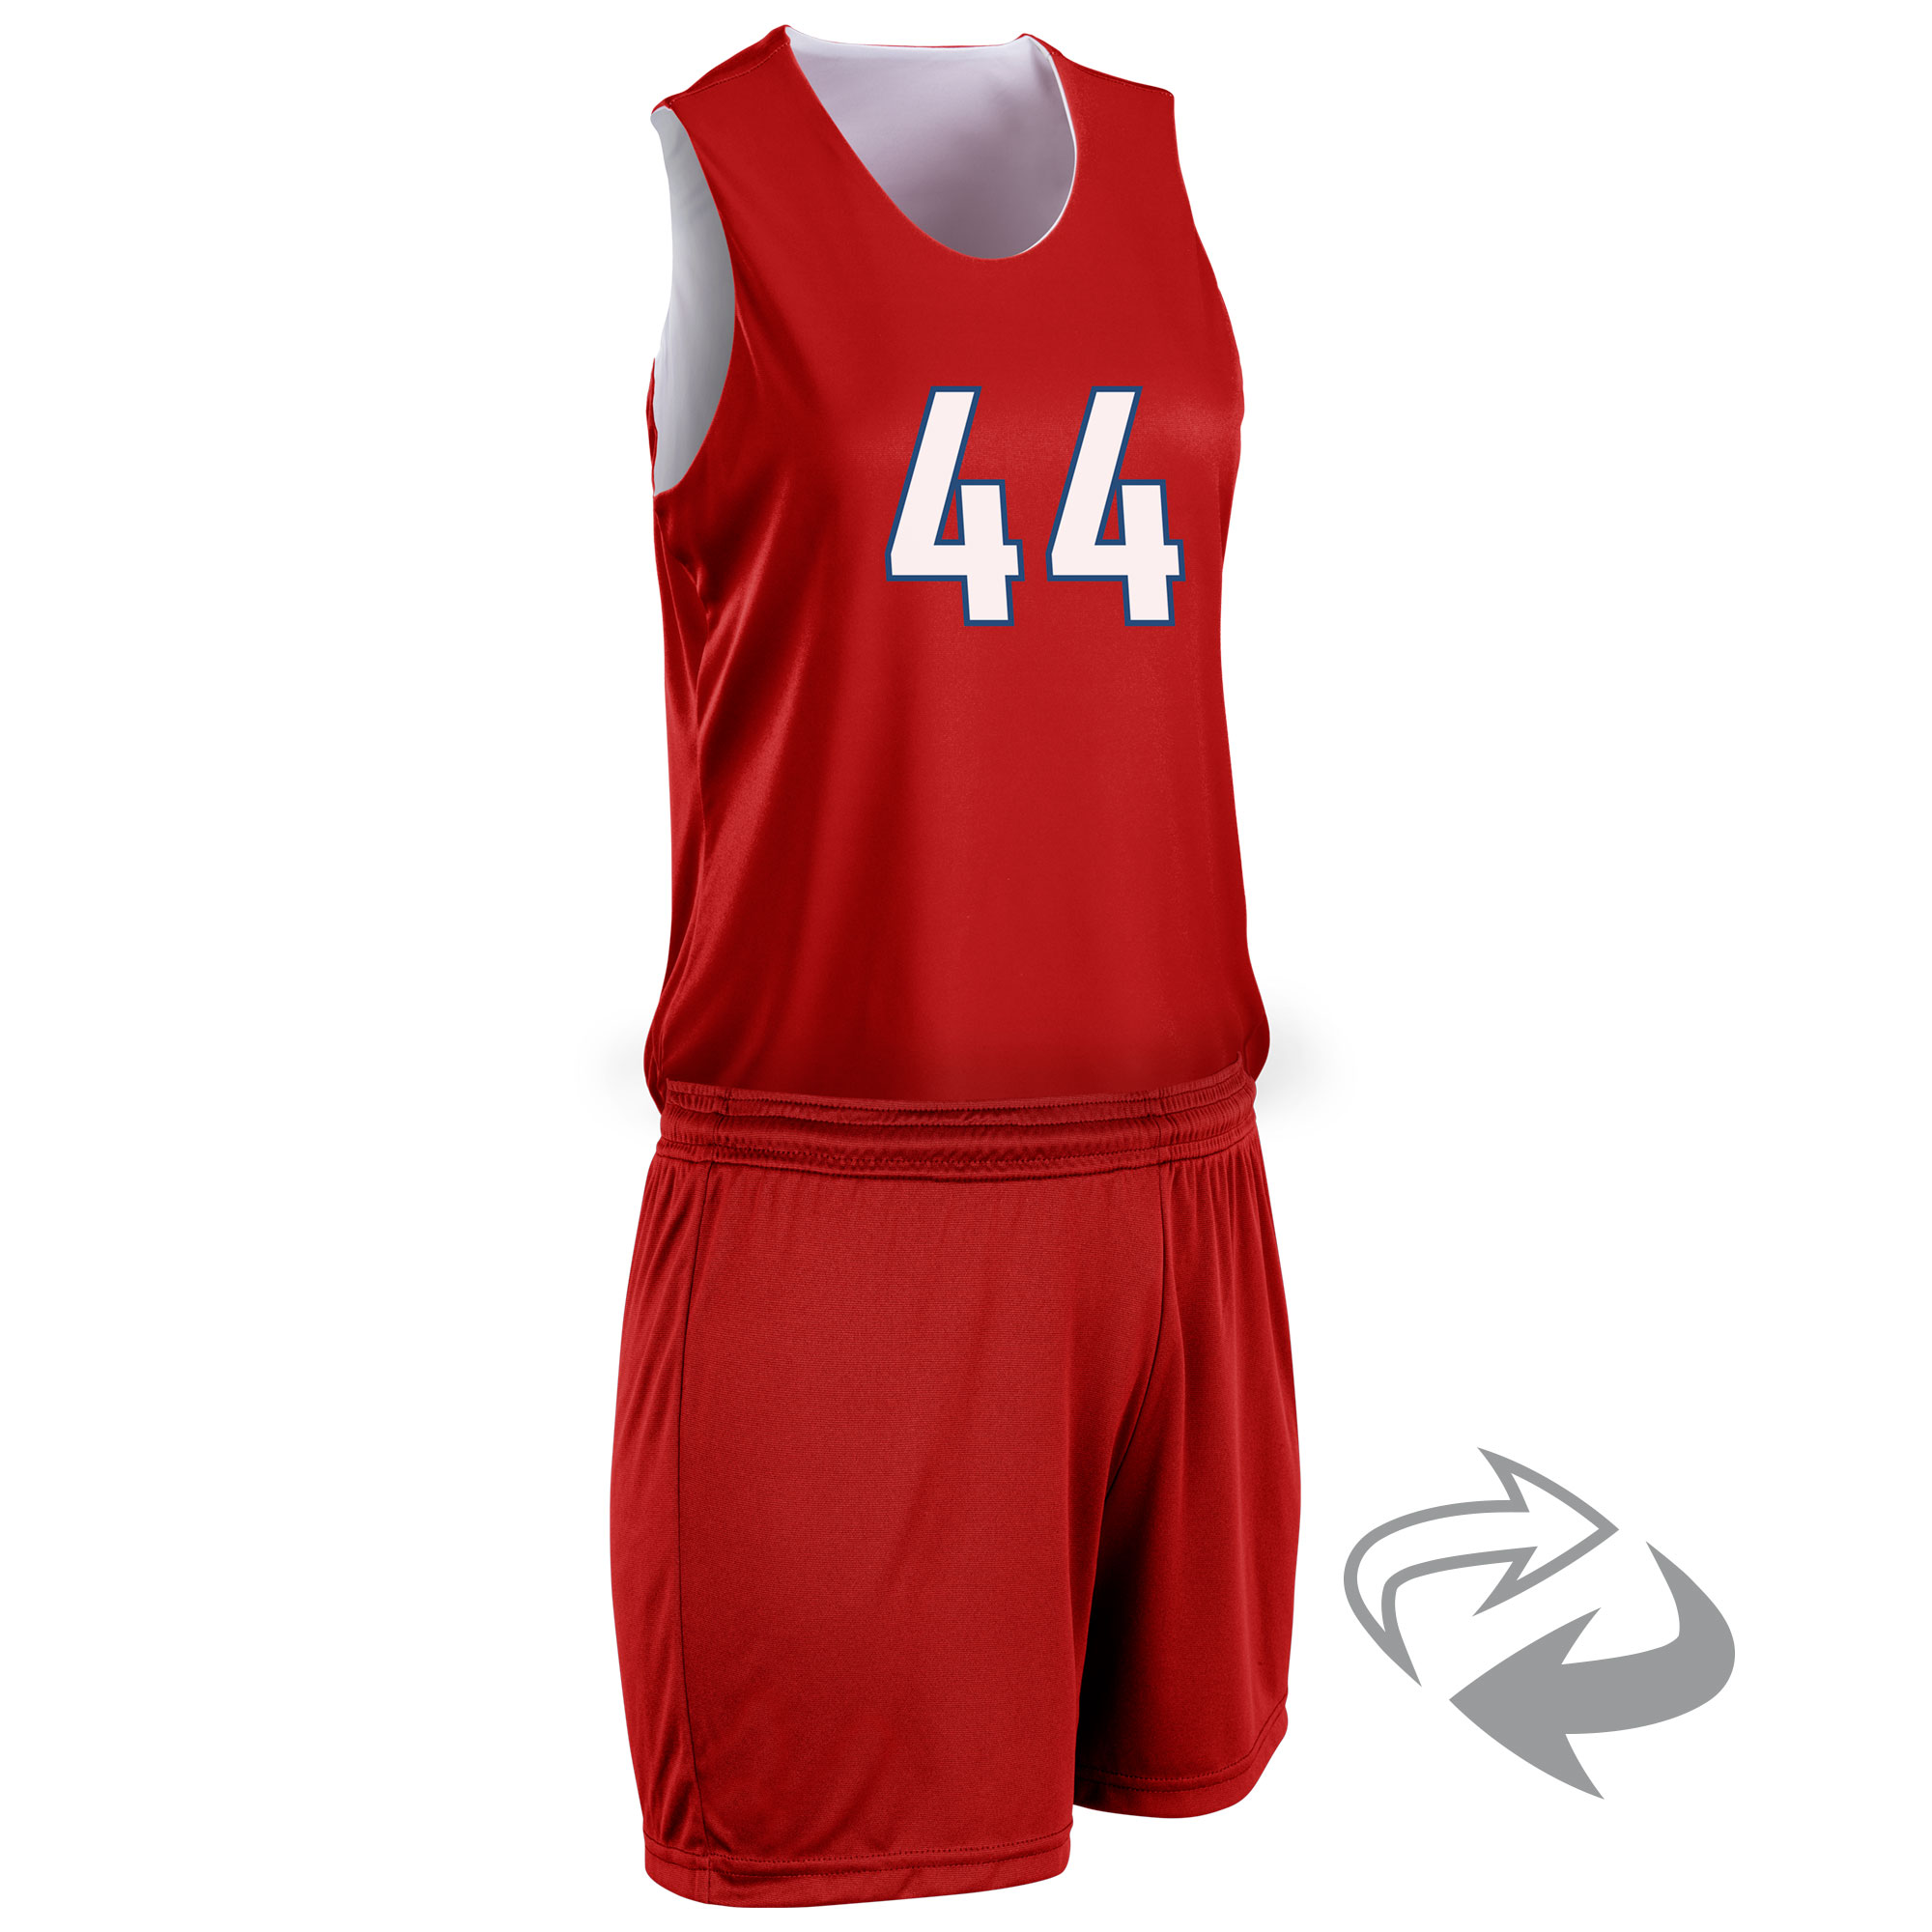 basketball-apparel-women's-uniforms-stock-women's-uniforms-vision